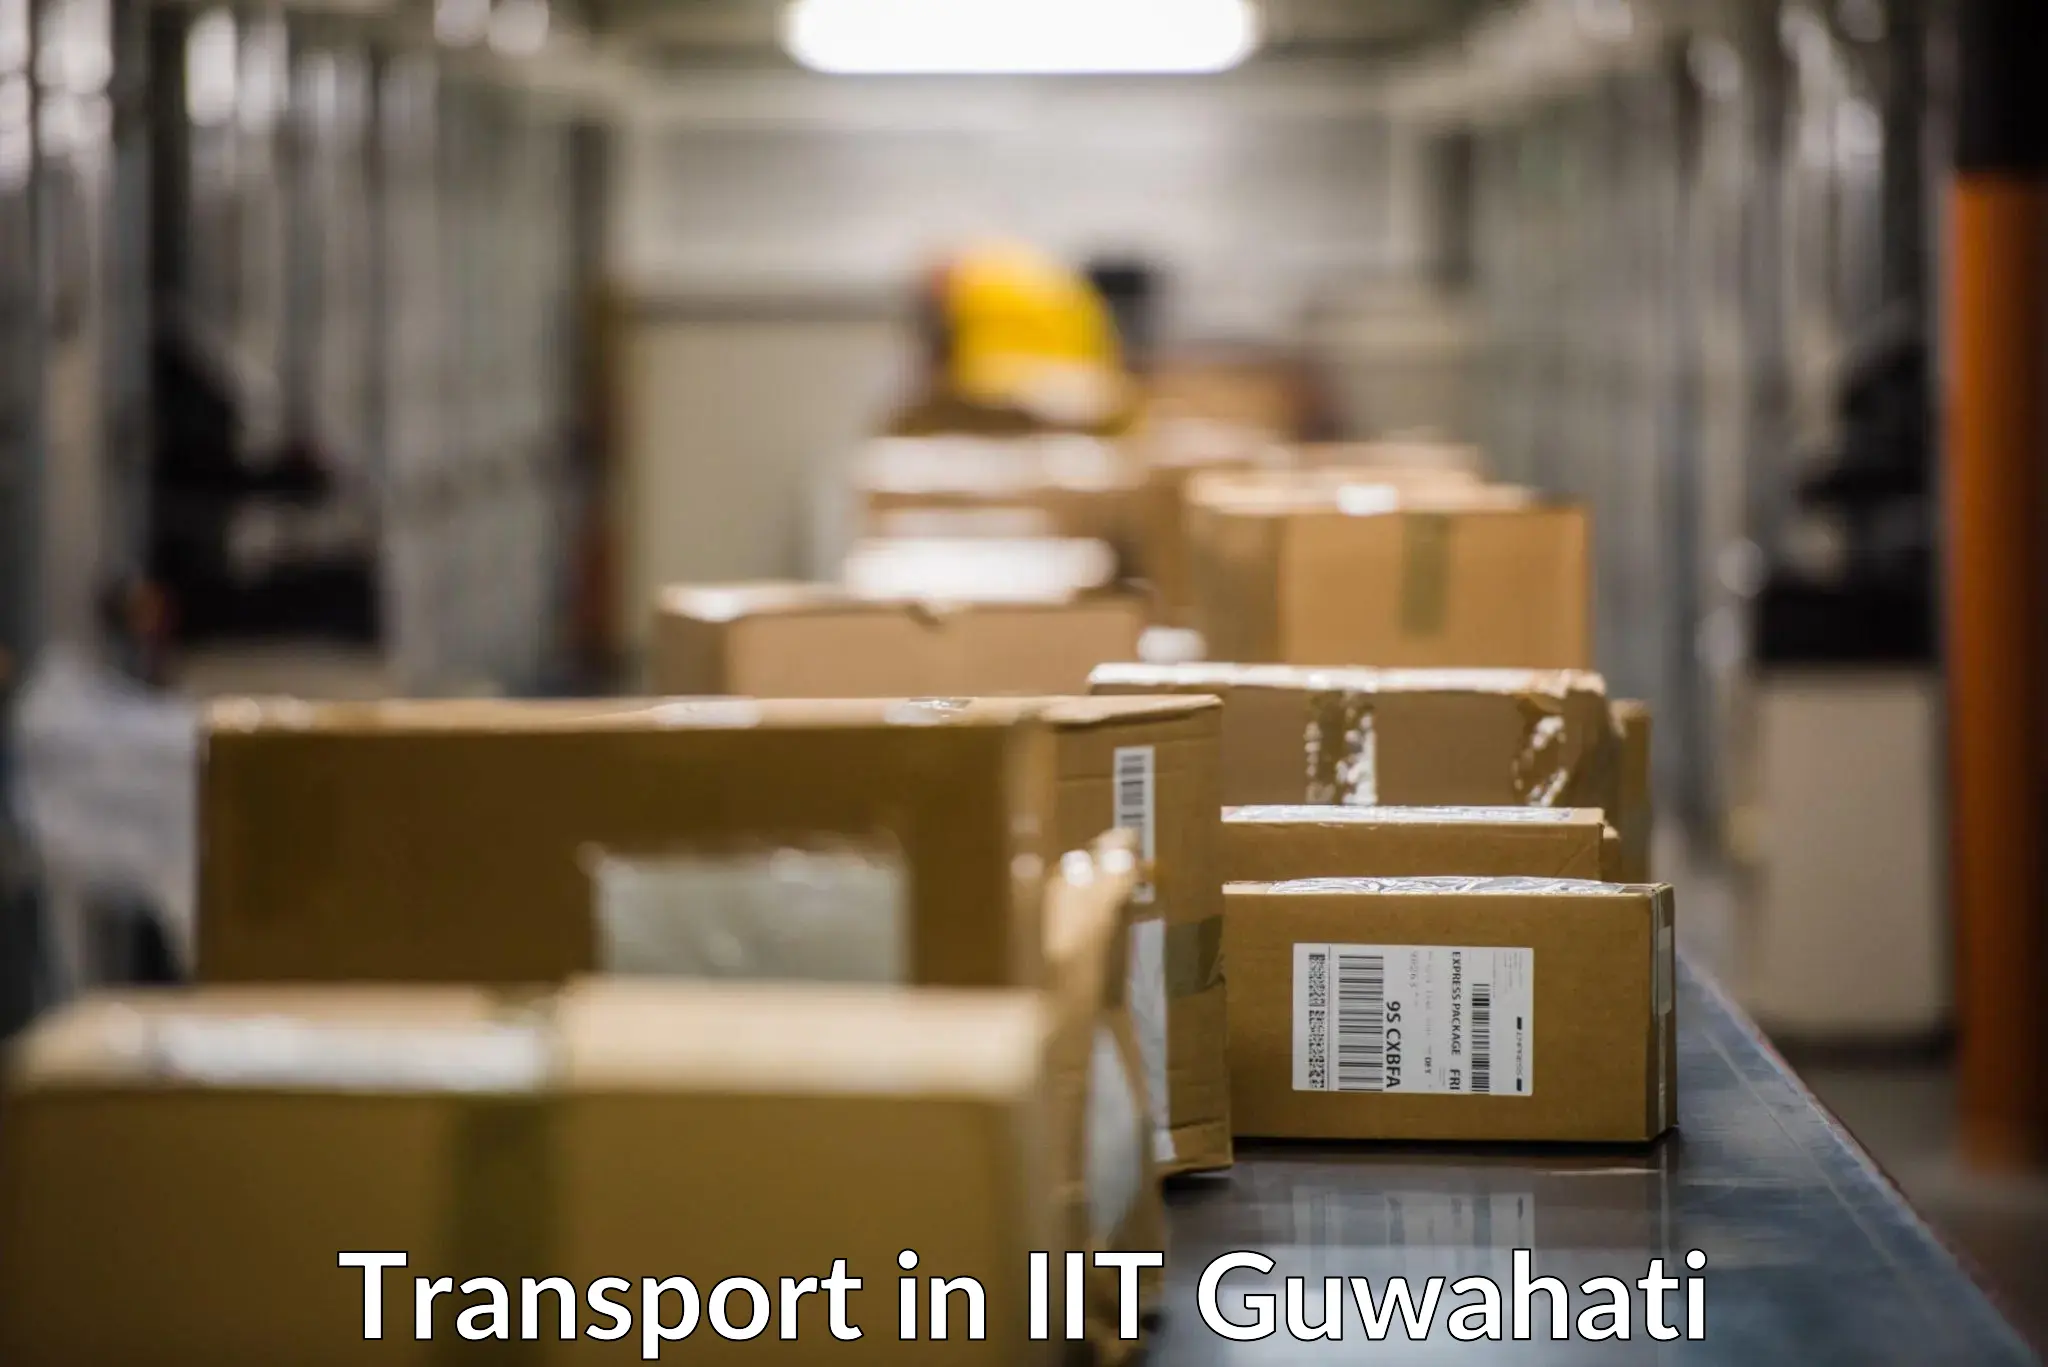 Online transport booking in IIT Guwahati